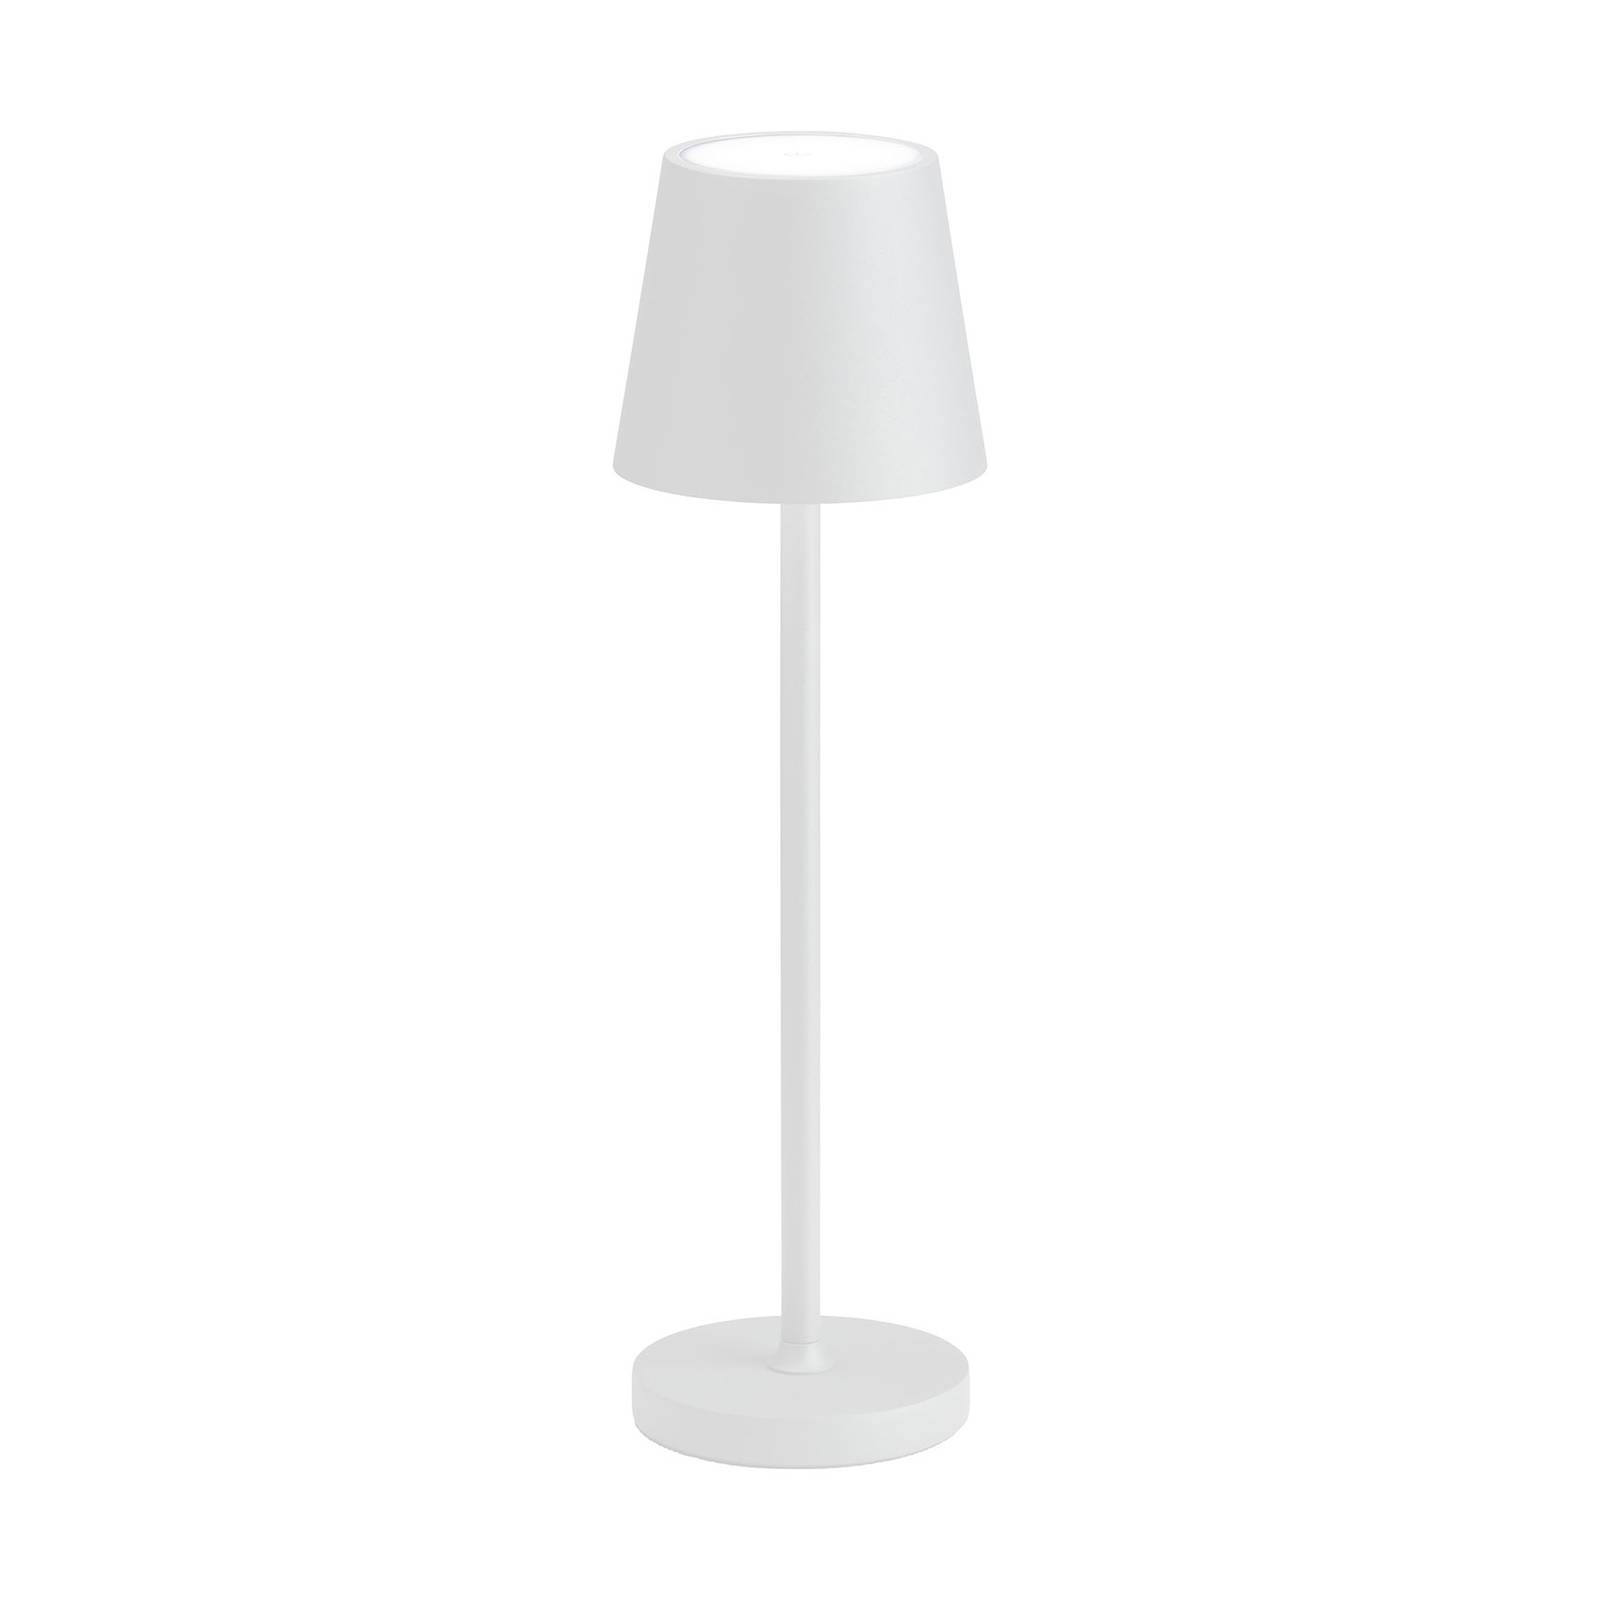 Image of LCD Lampe de table LED 5098 batterie IP54 dim blanche 4260277681104